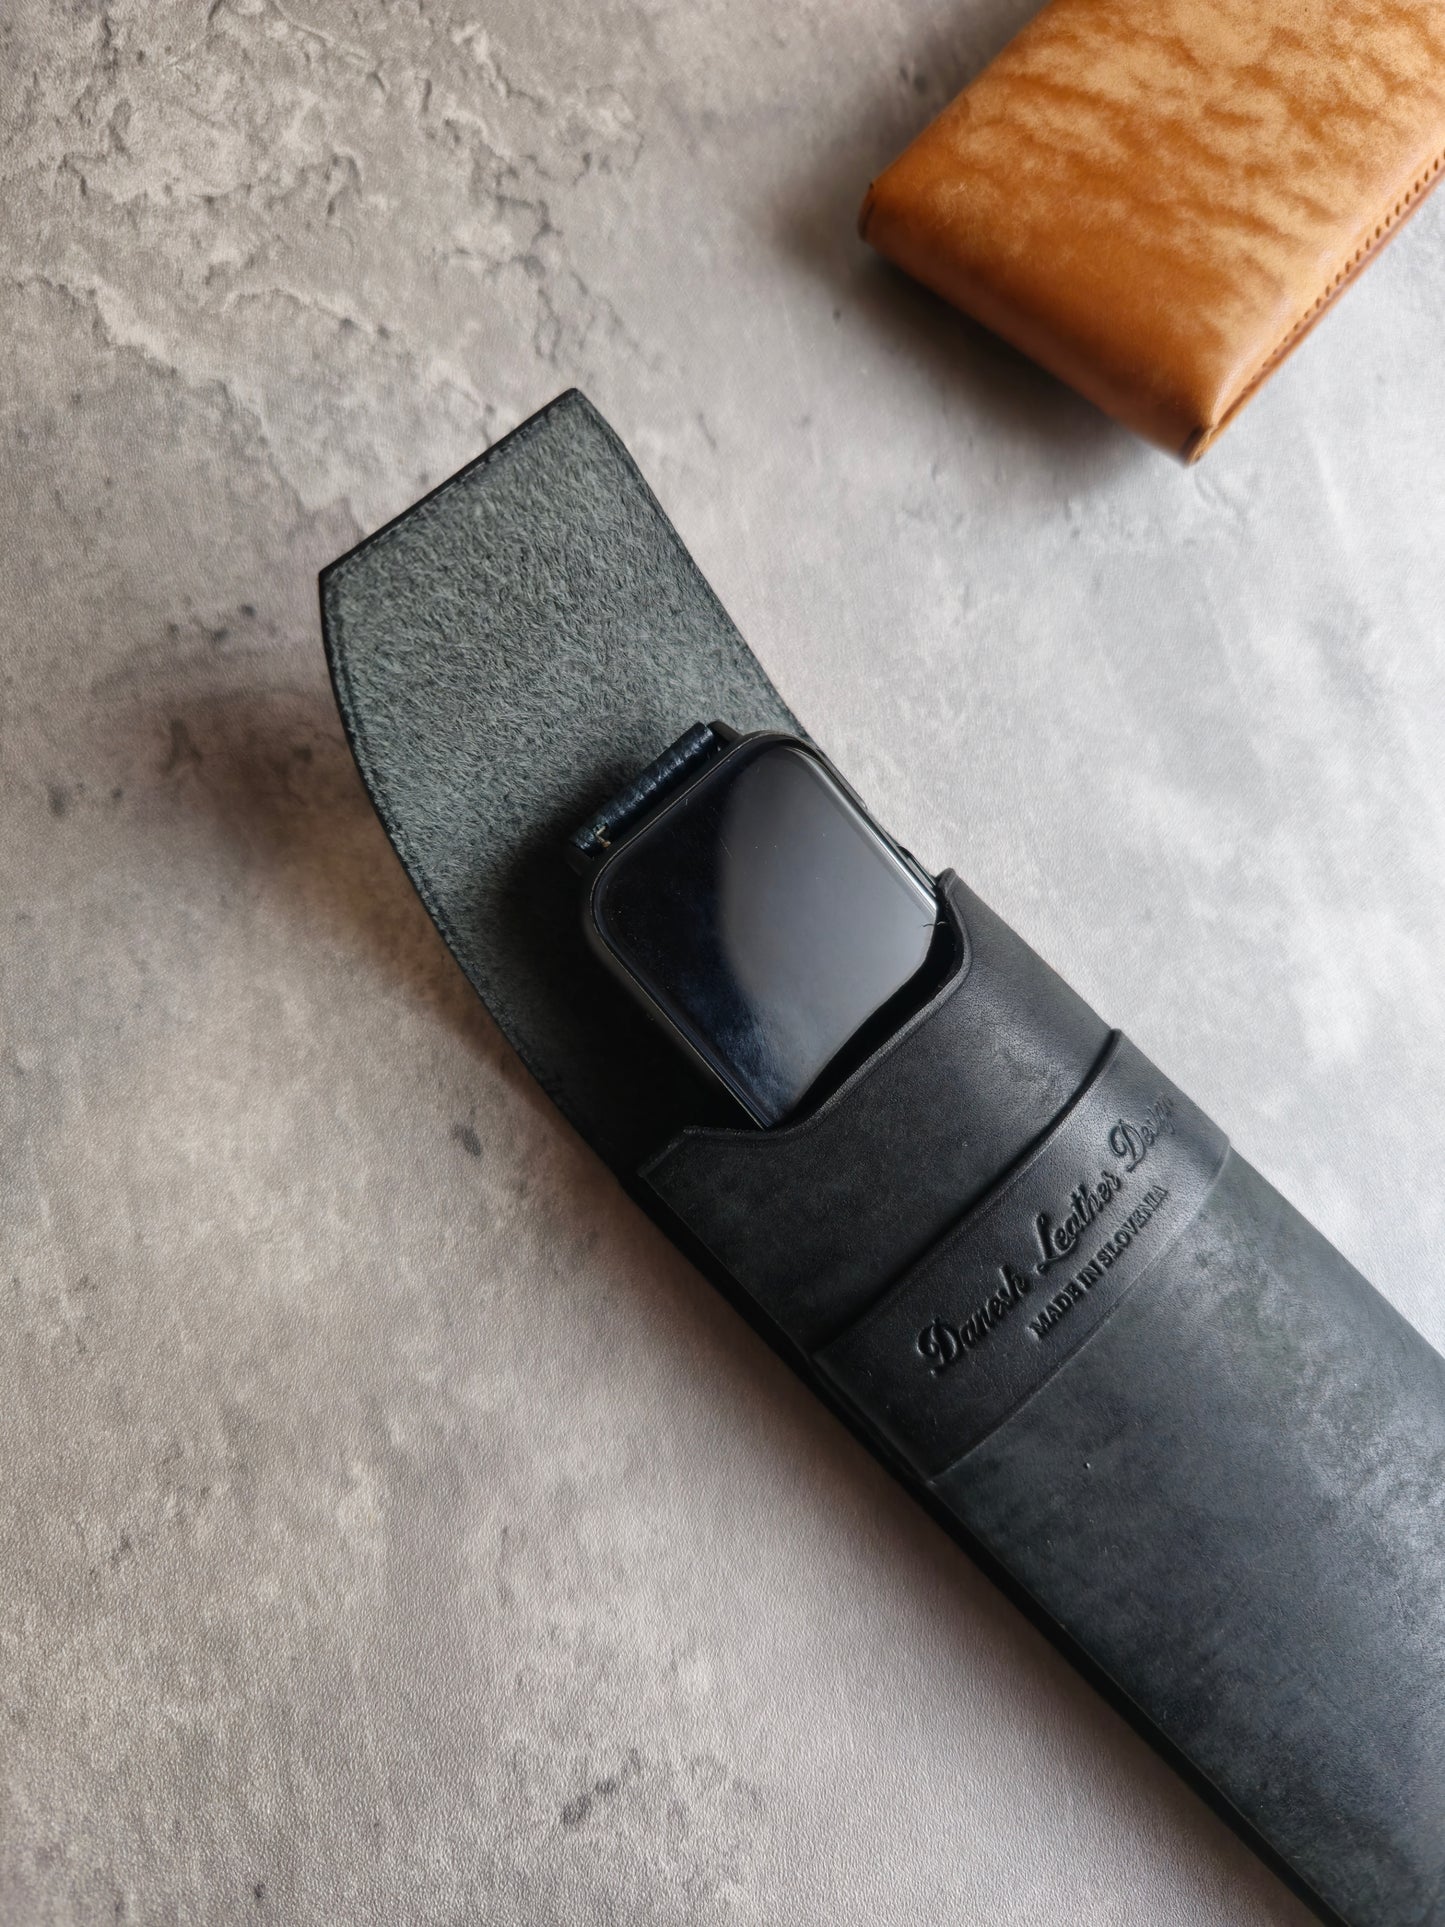 Timekeep wrist watch case | Leather craft Template - DIY - PDF pattern